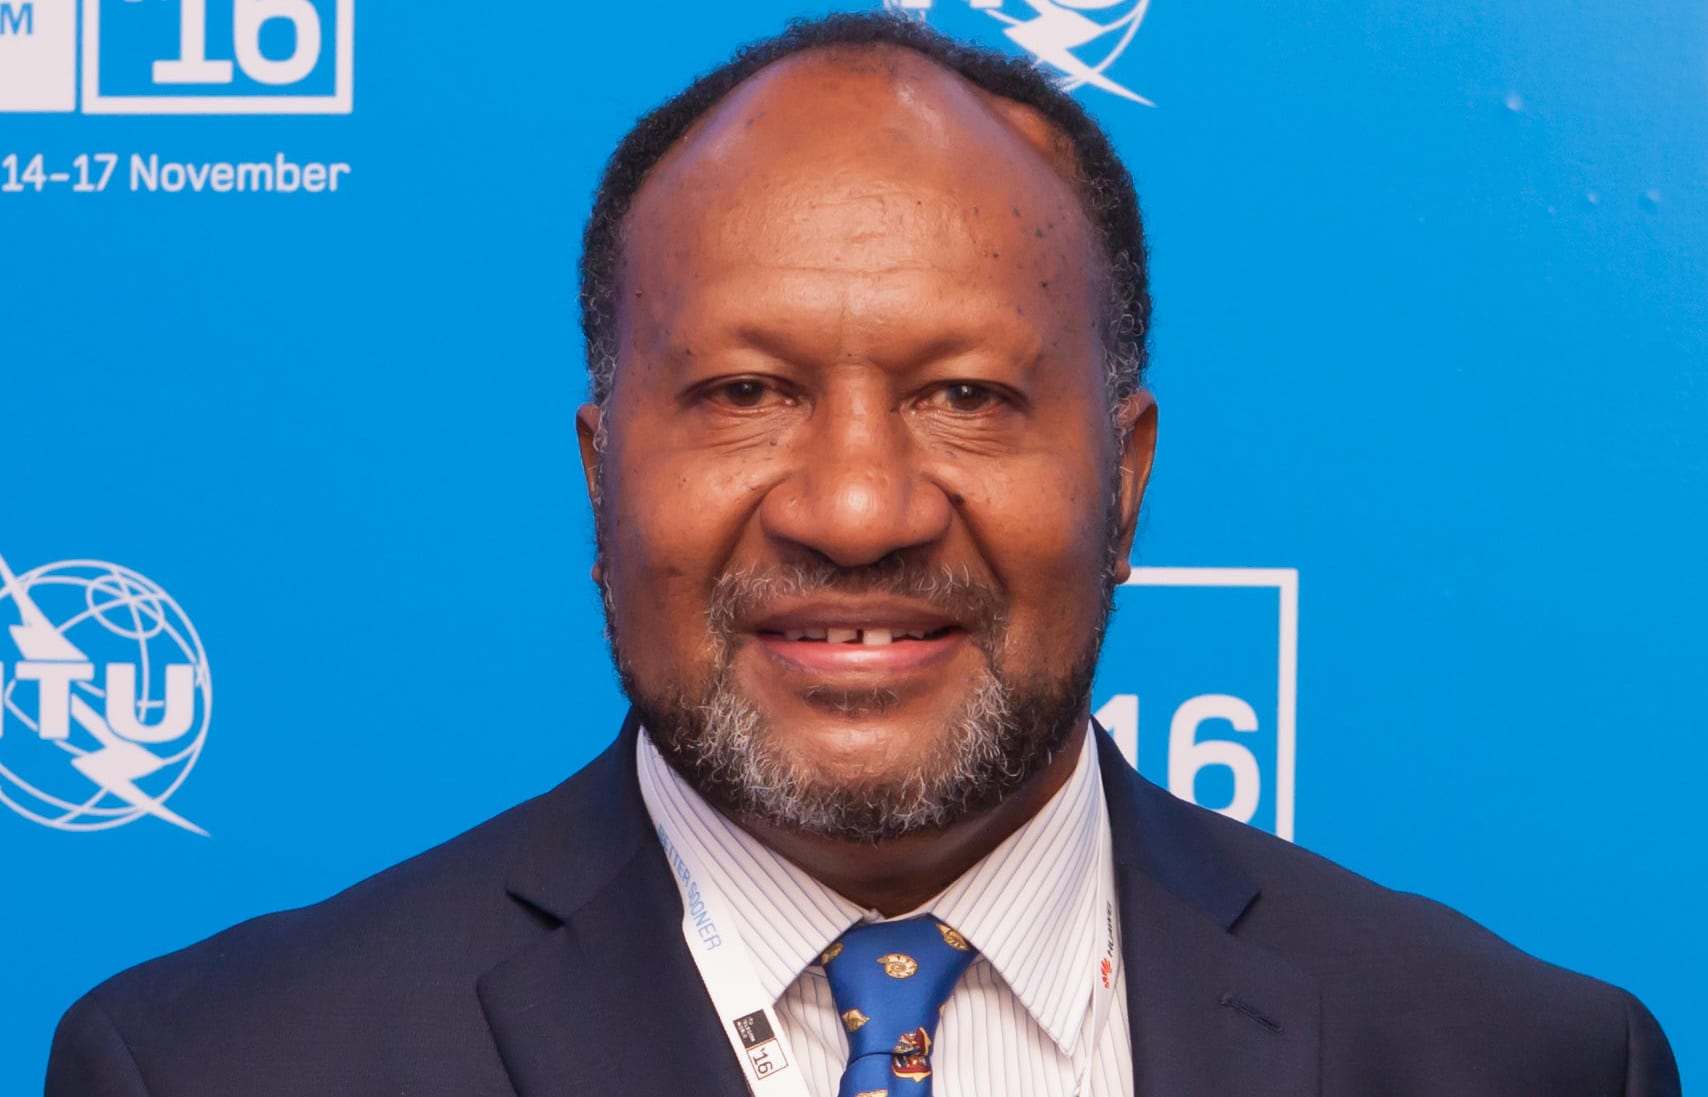 The Prime Minister of Vanuatu Charlot Salwai.